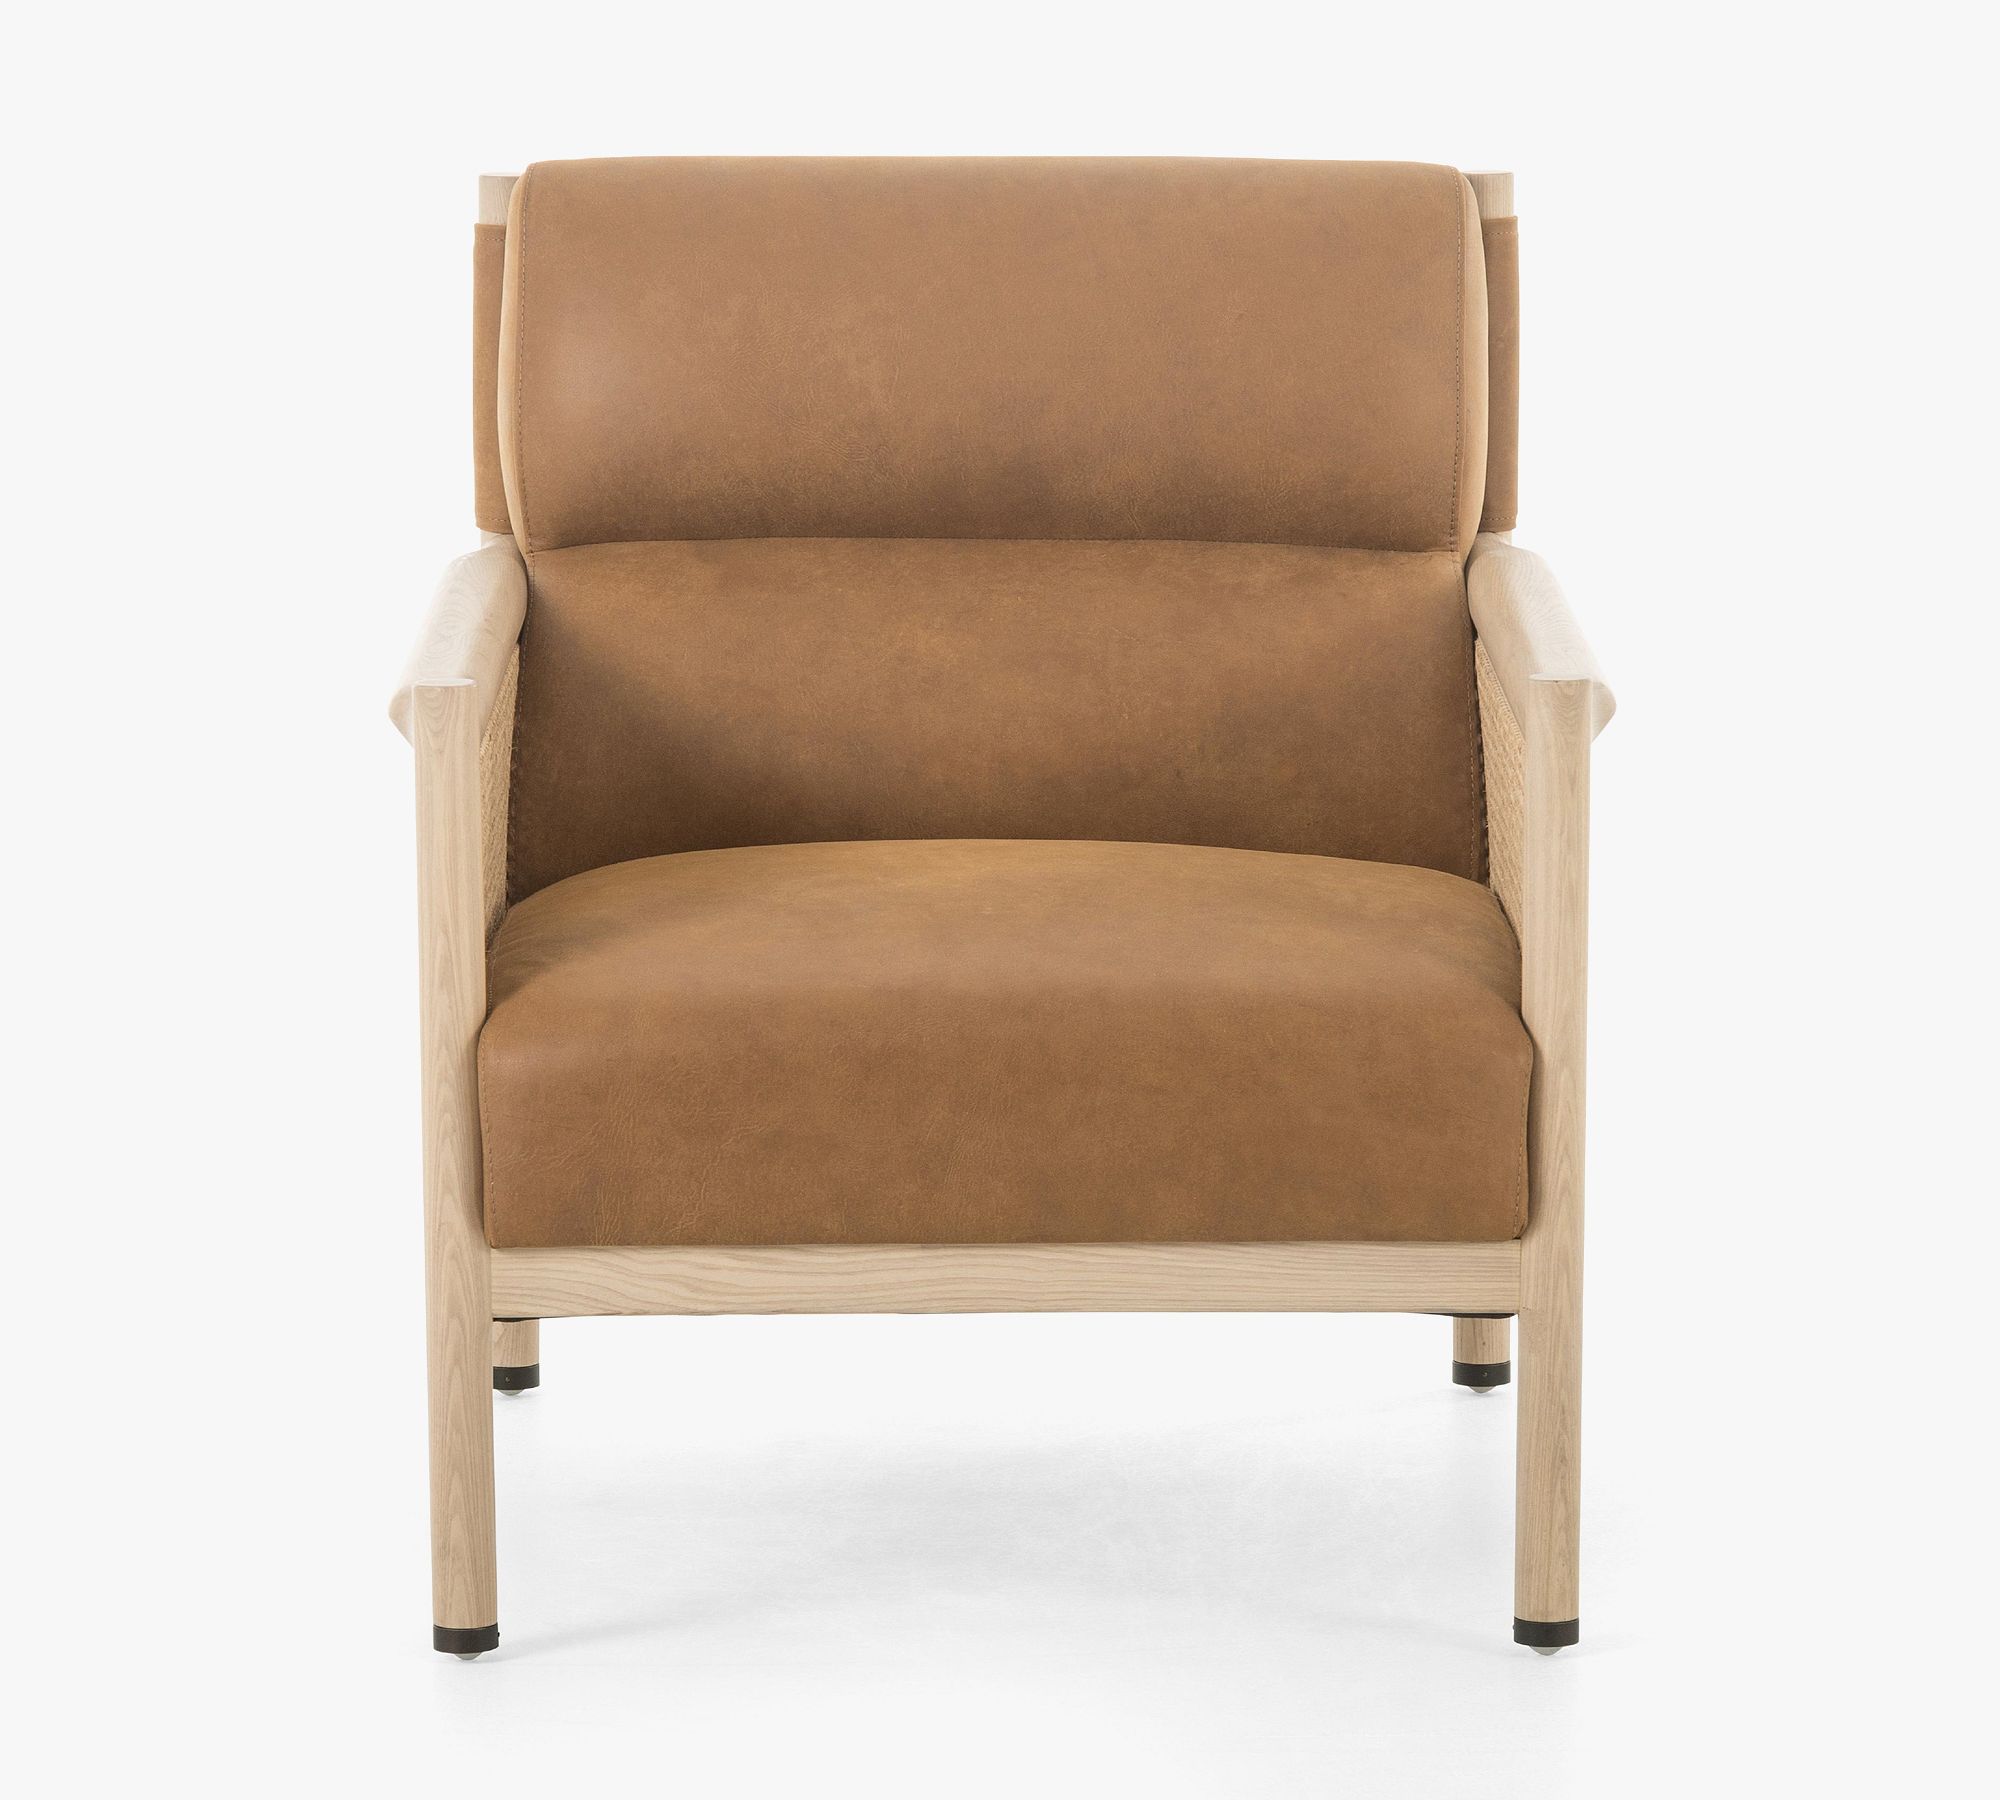 Rowan Cane Leather Chair